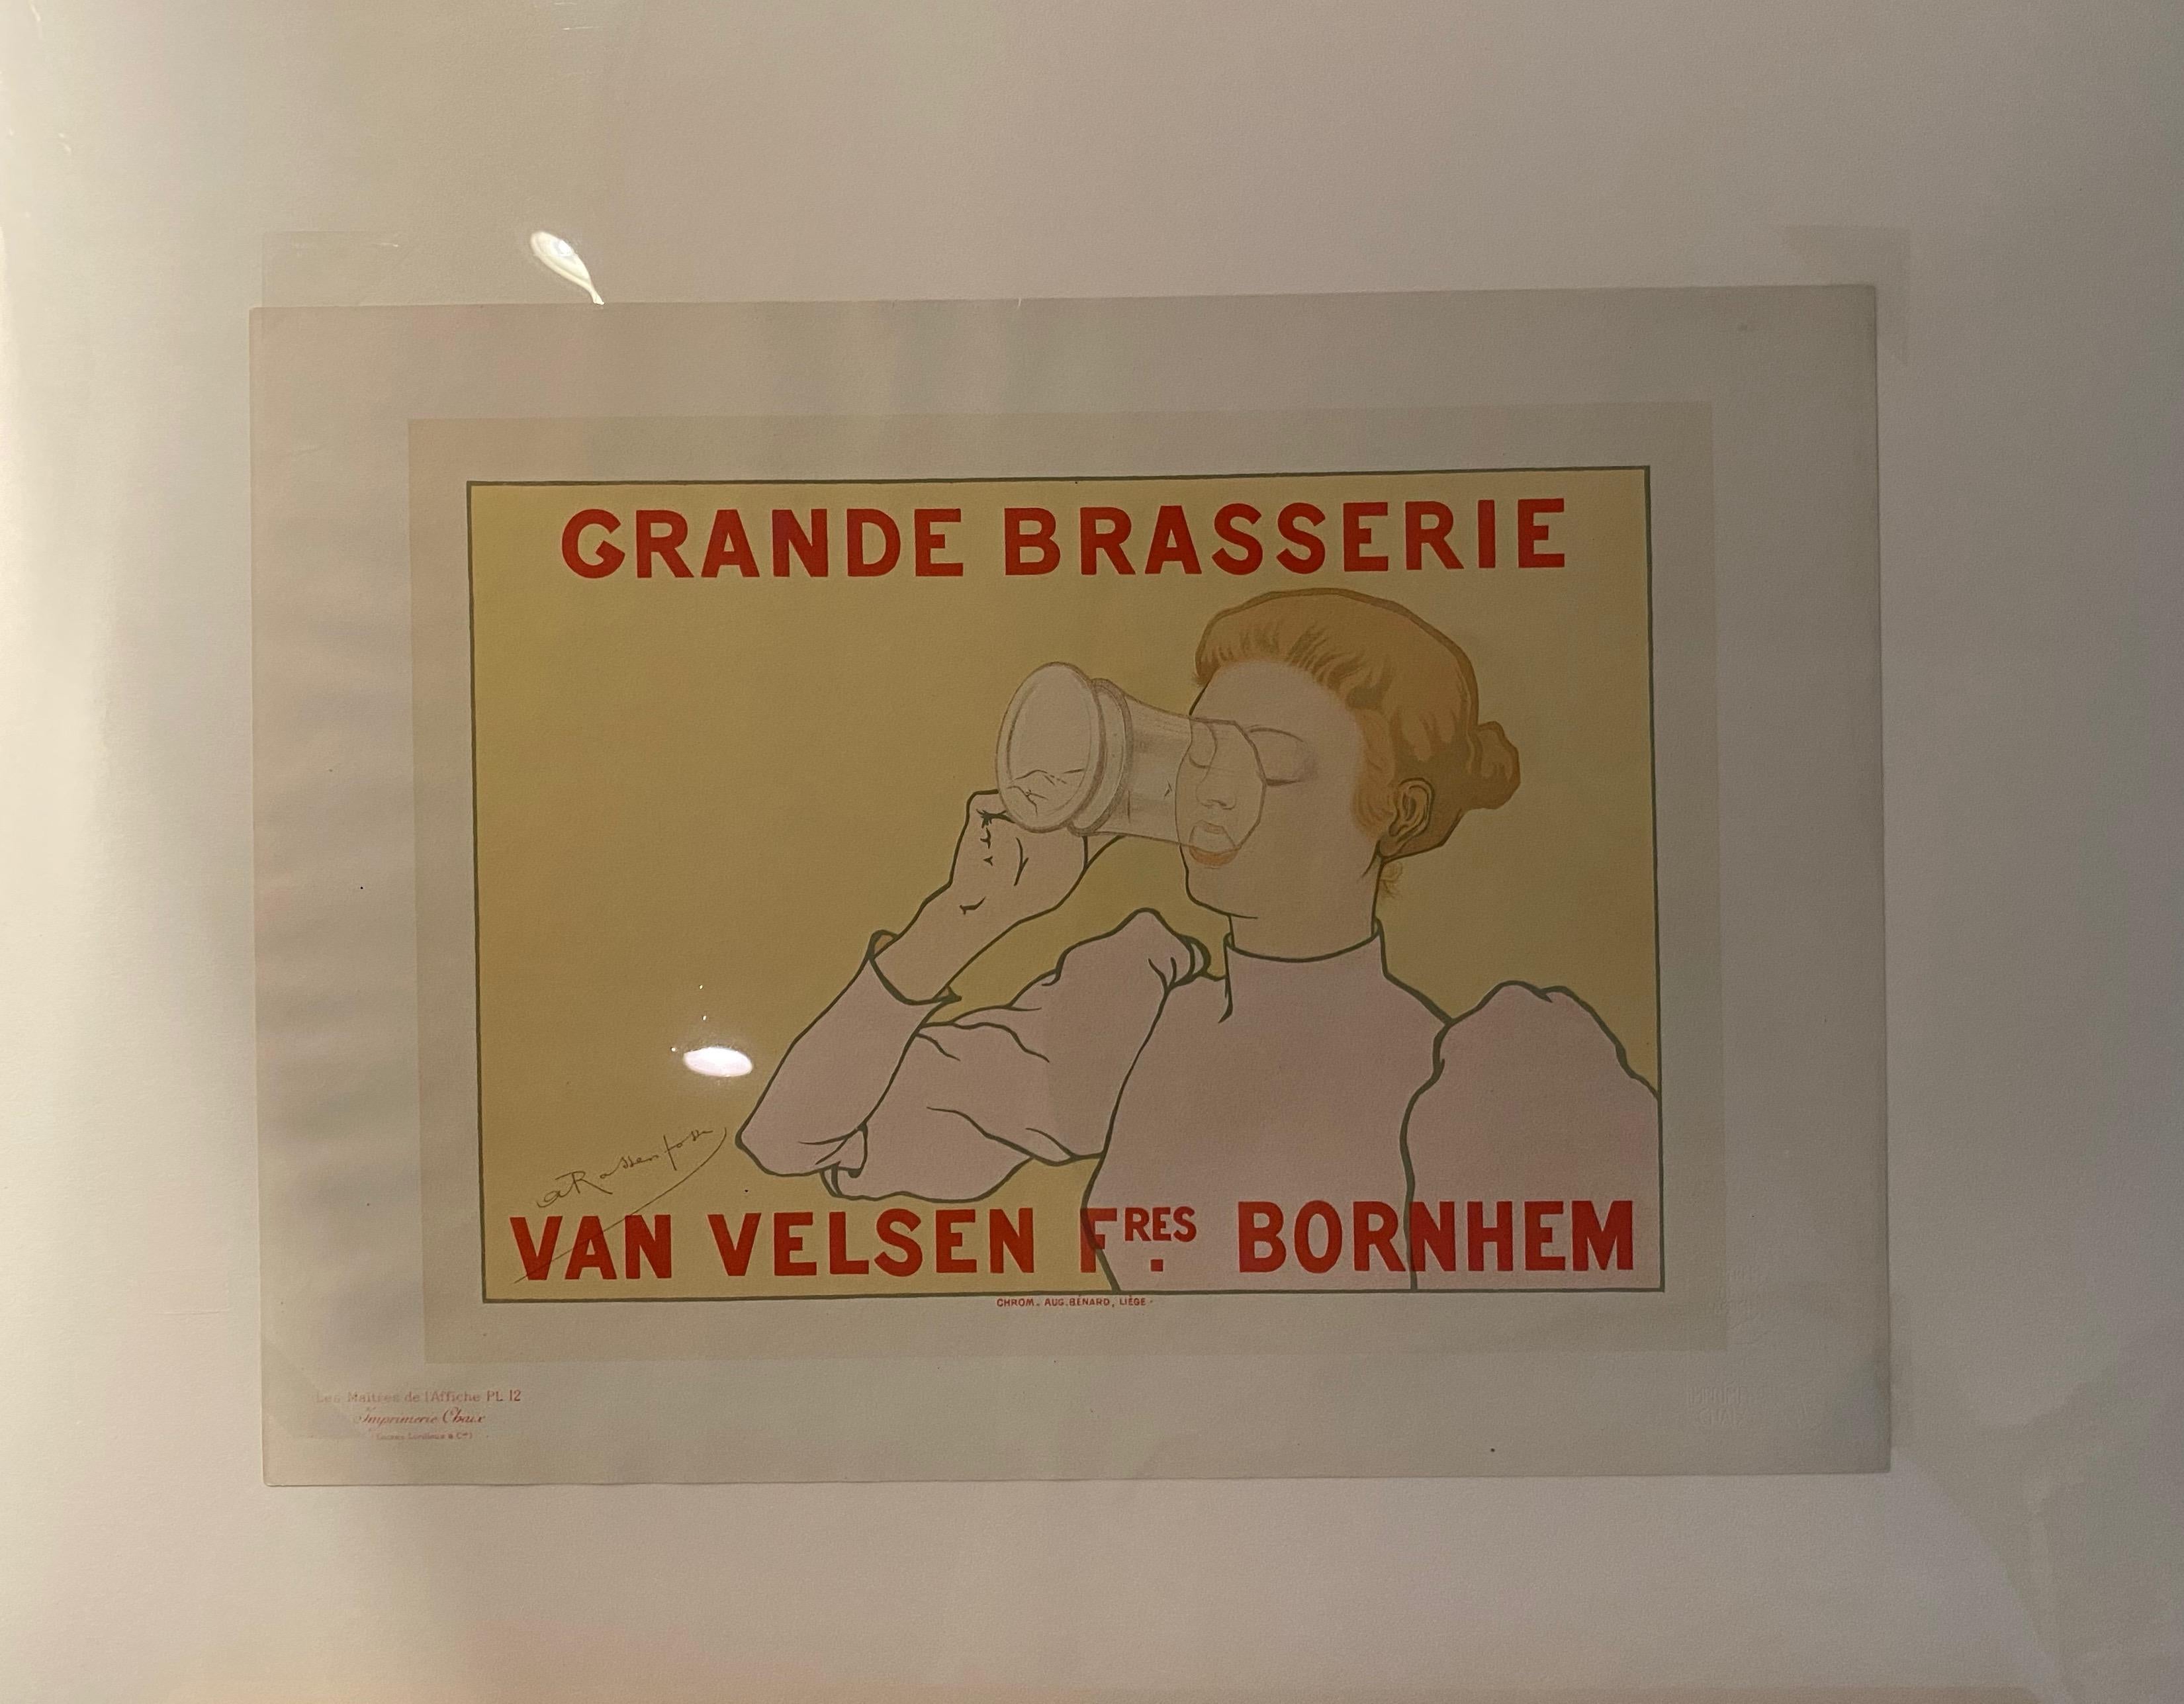 Armand Rassenfosse Figurative Print - "Grande Brasserie Van Velsen" from "Les Maitres de L'Affiche" series